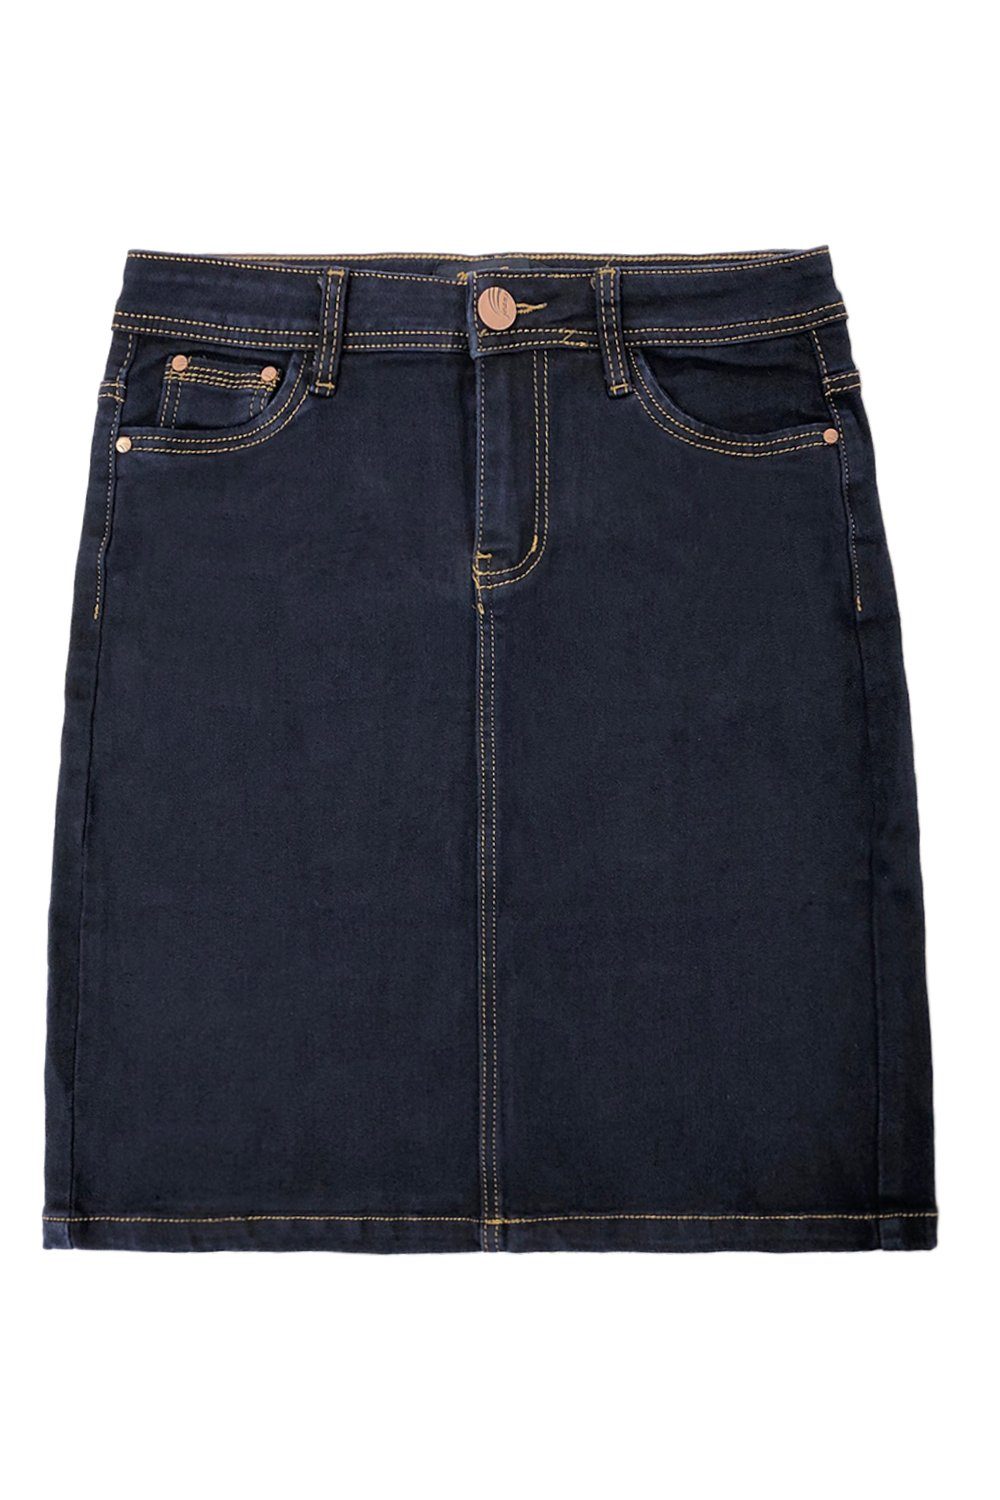 Egomaxx Sommerrock »3559« (Reißverschluss, 1-tlg., normal) Damen Denim Jeans  Rock Classic Knielang Stretch Skirt online kaufen | OTTO